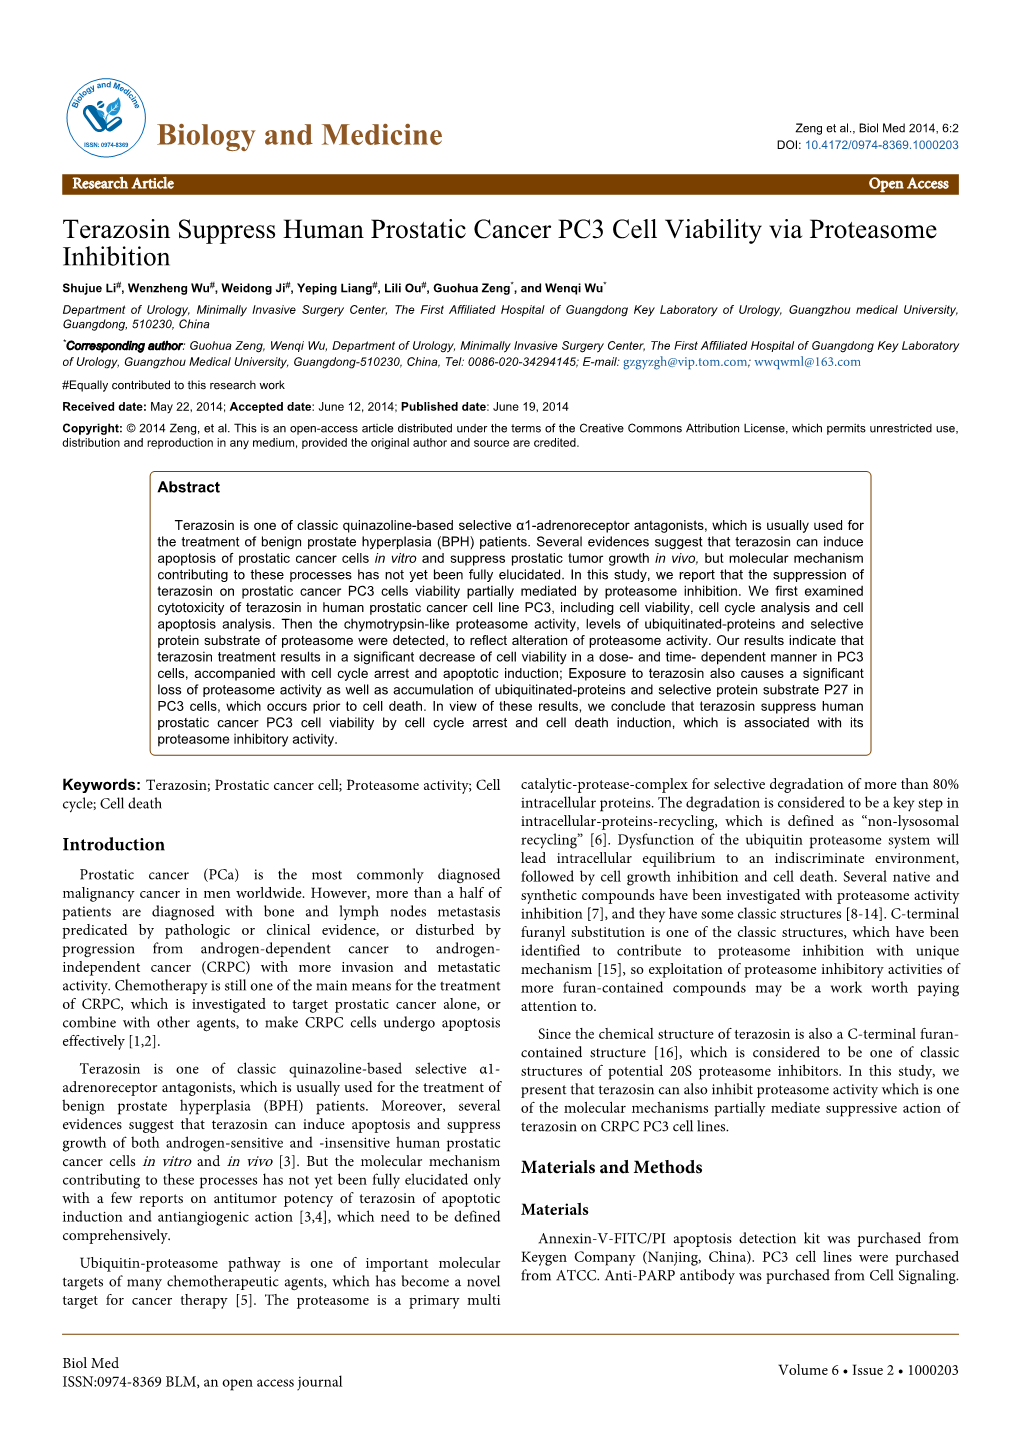 Terazosin Suppress Human Prostatic Cancer PC3 Cell Viability Via Proteasome